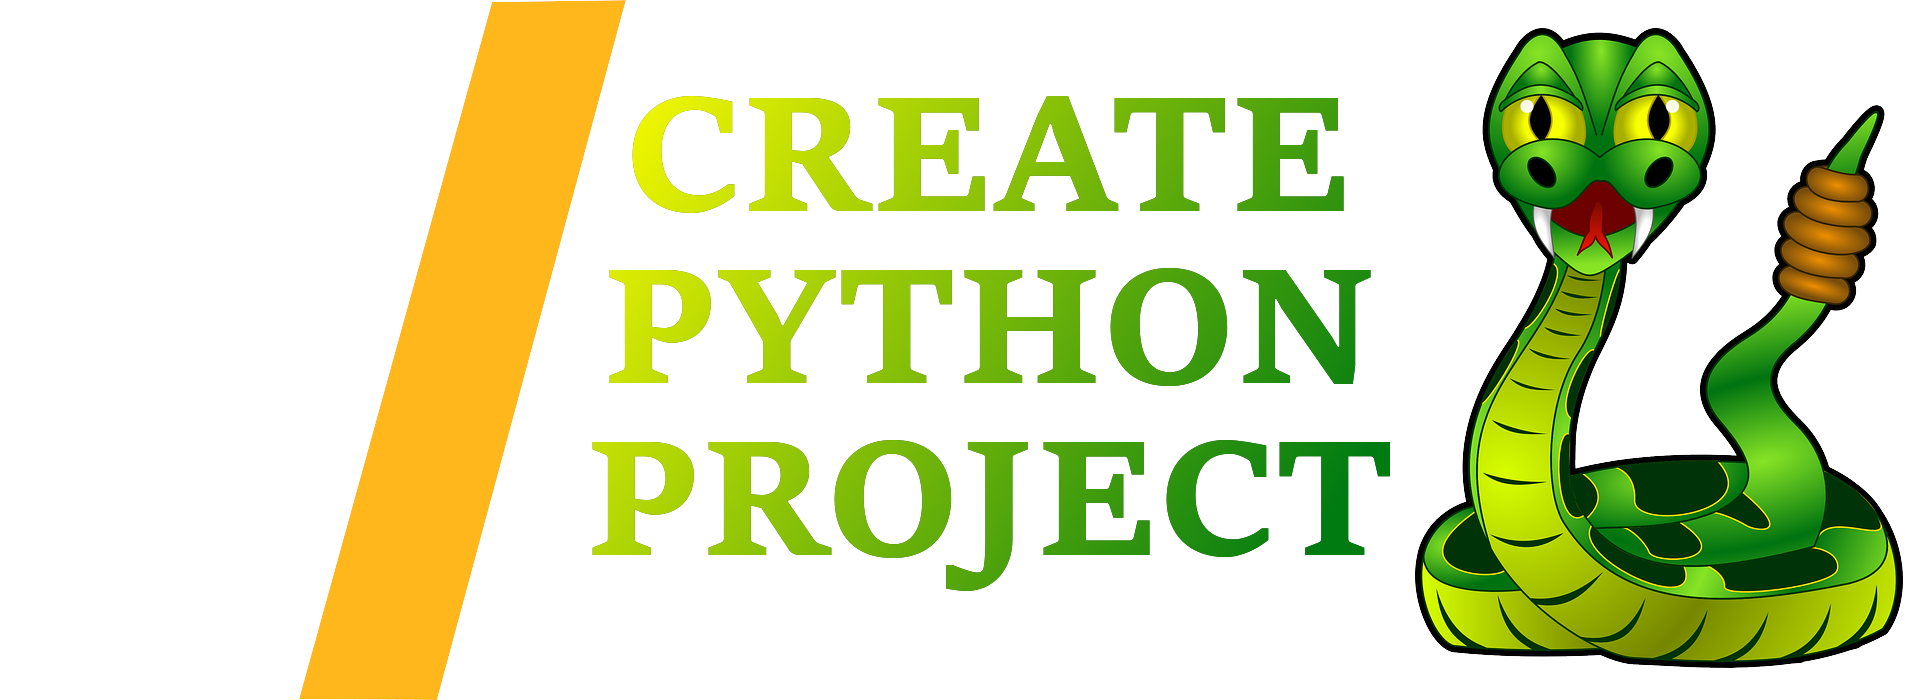 Create a Python project